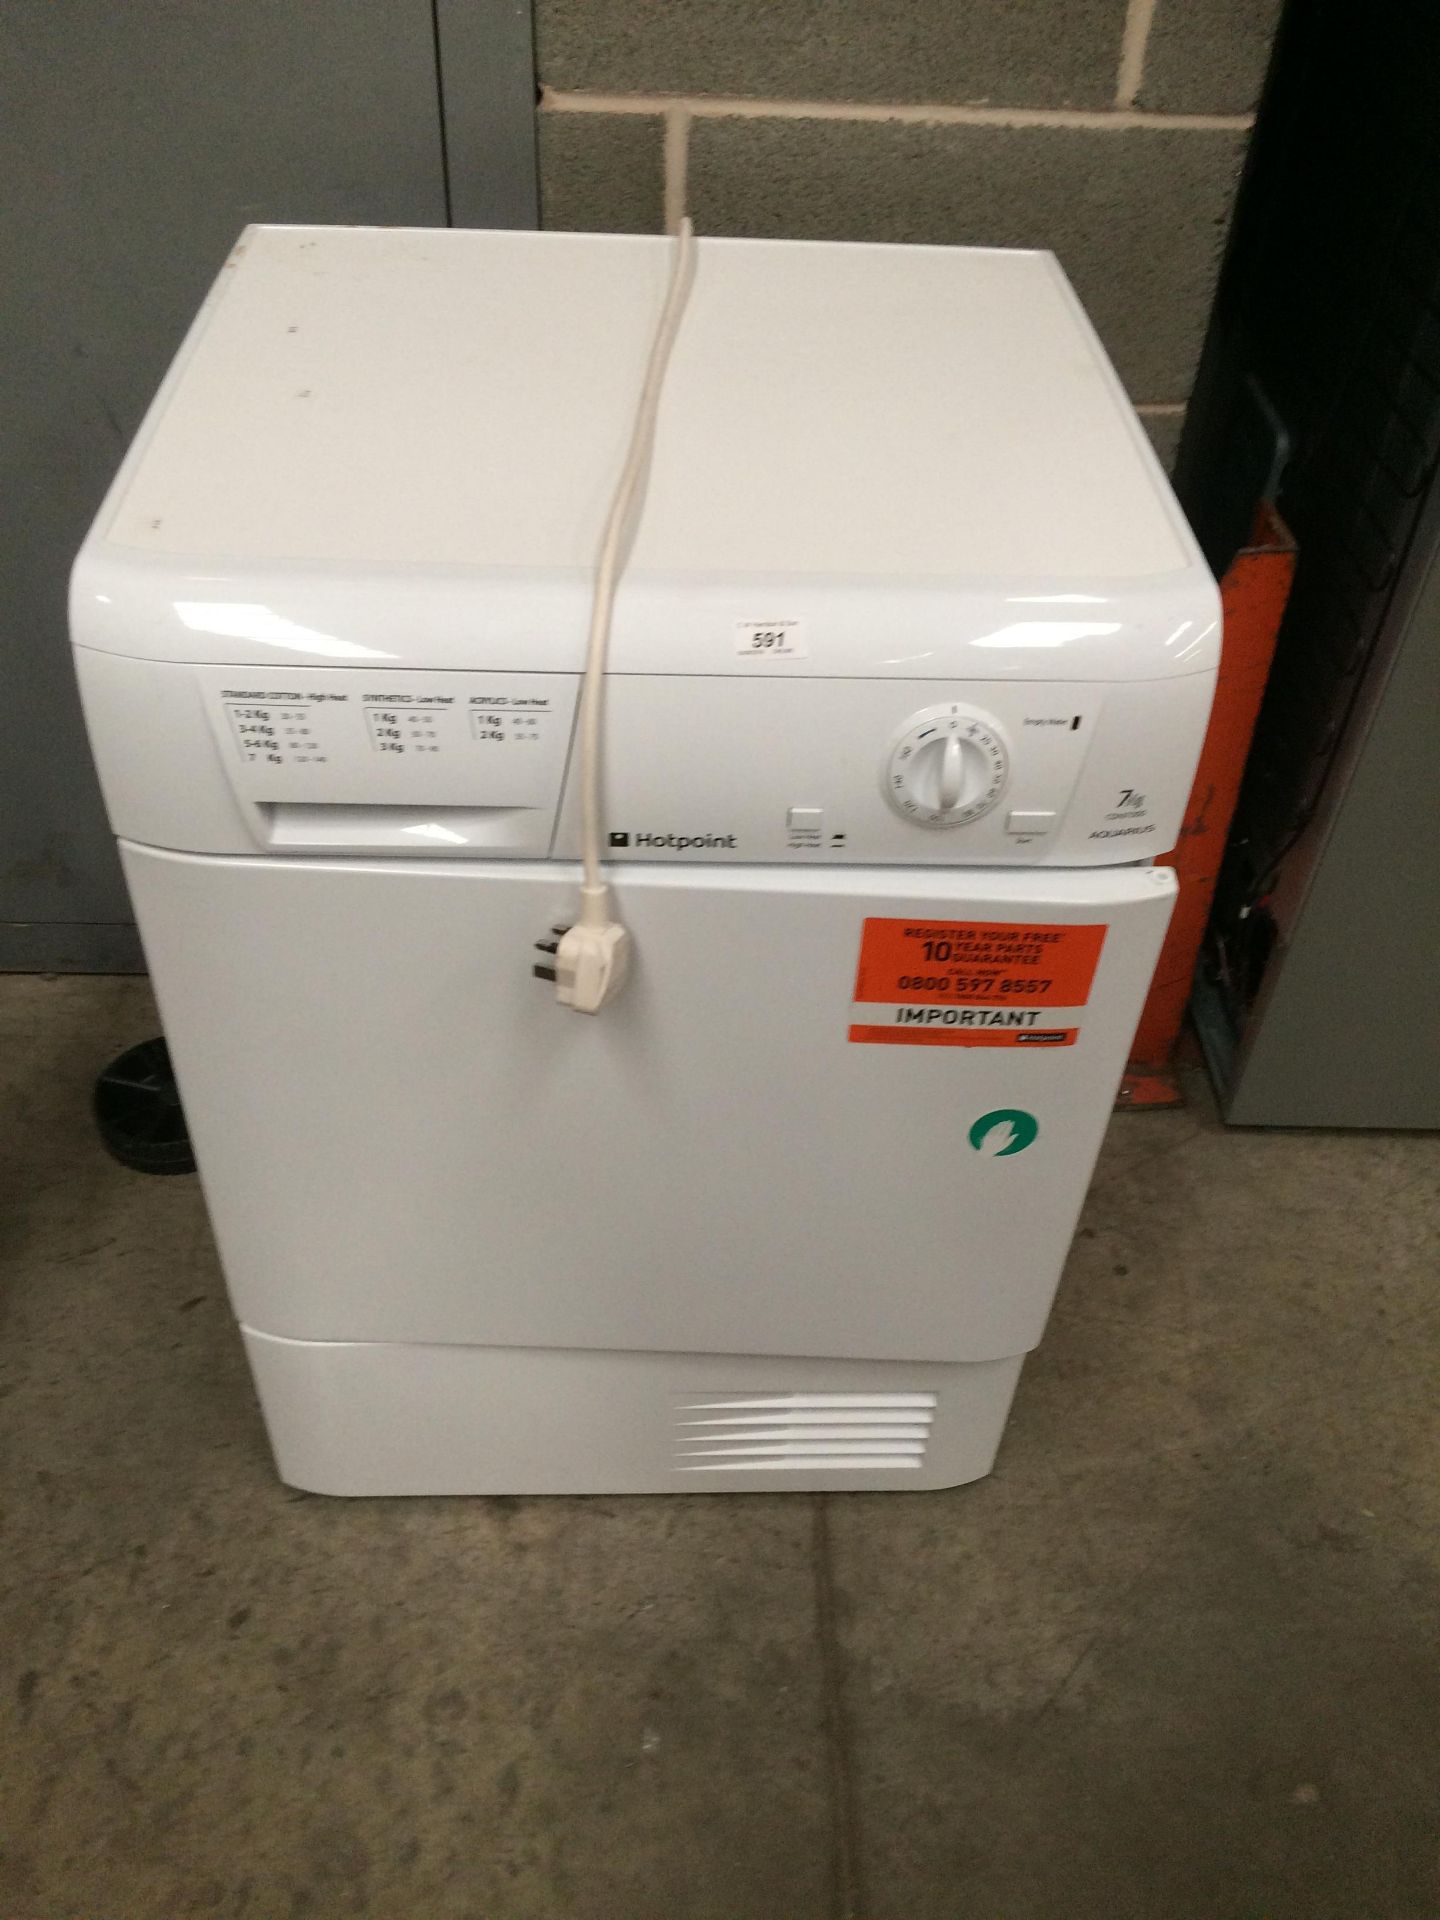 A Hotpoint Aquarius CDN7000 7kg condenser dryer